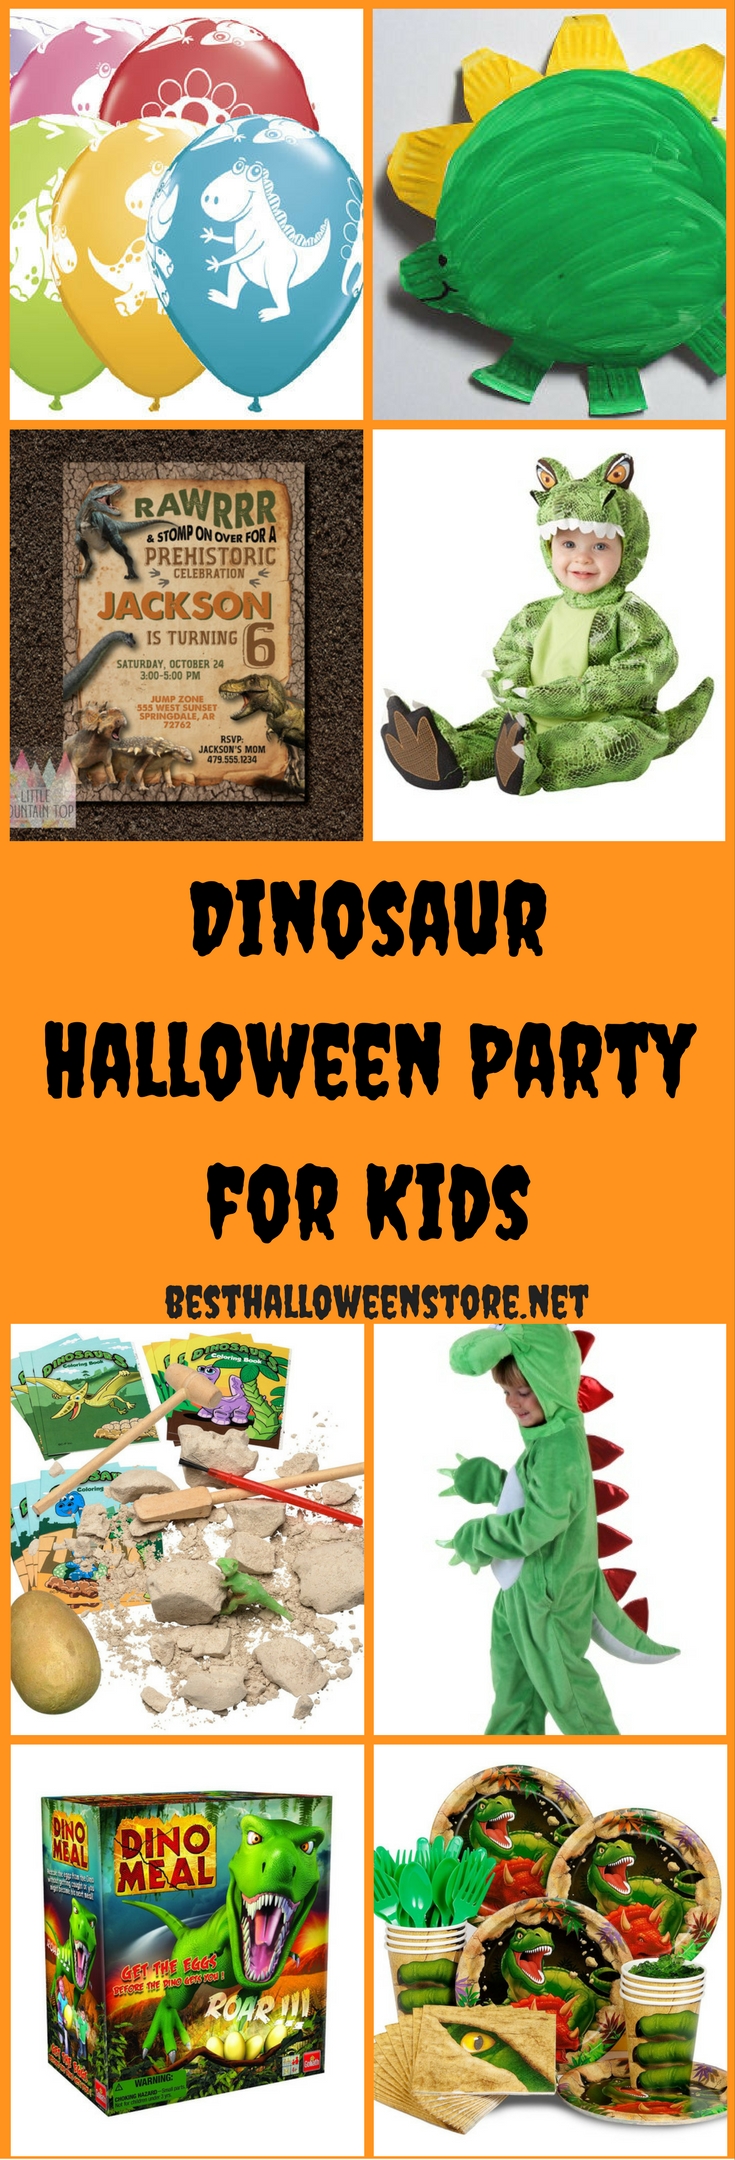 Dinosaur Halloween Party for Kids